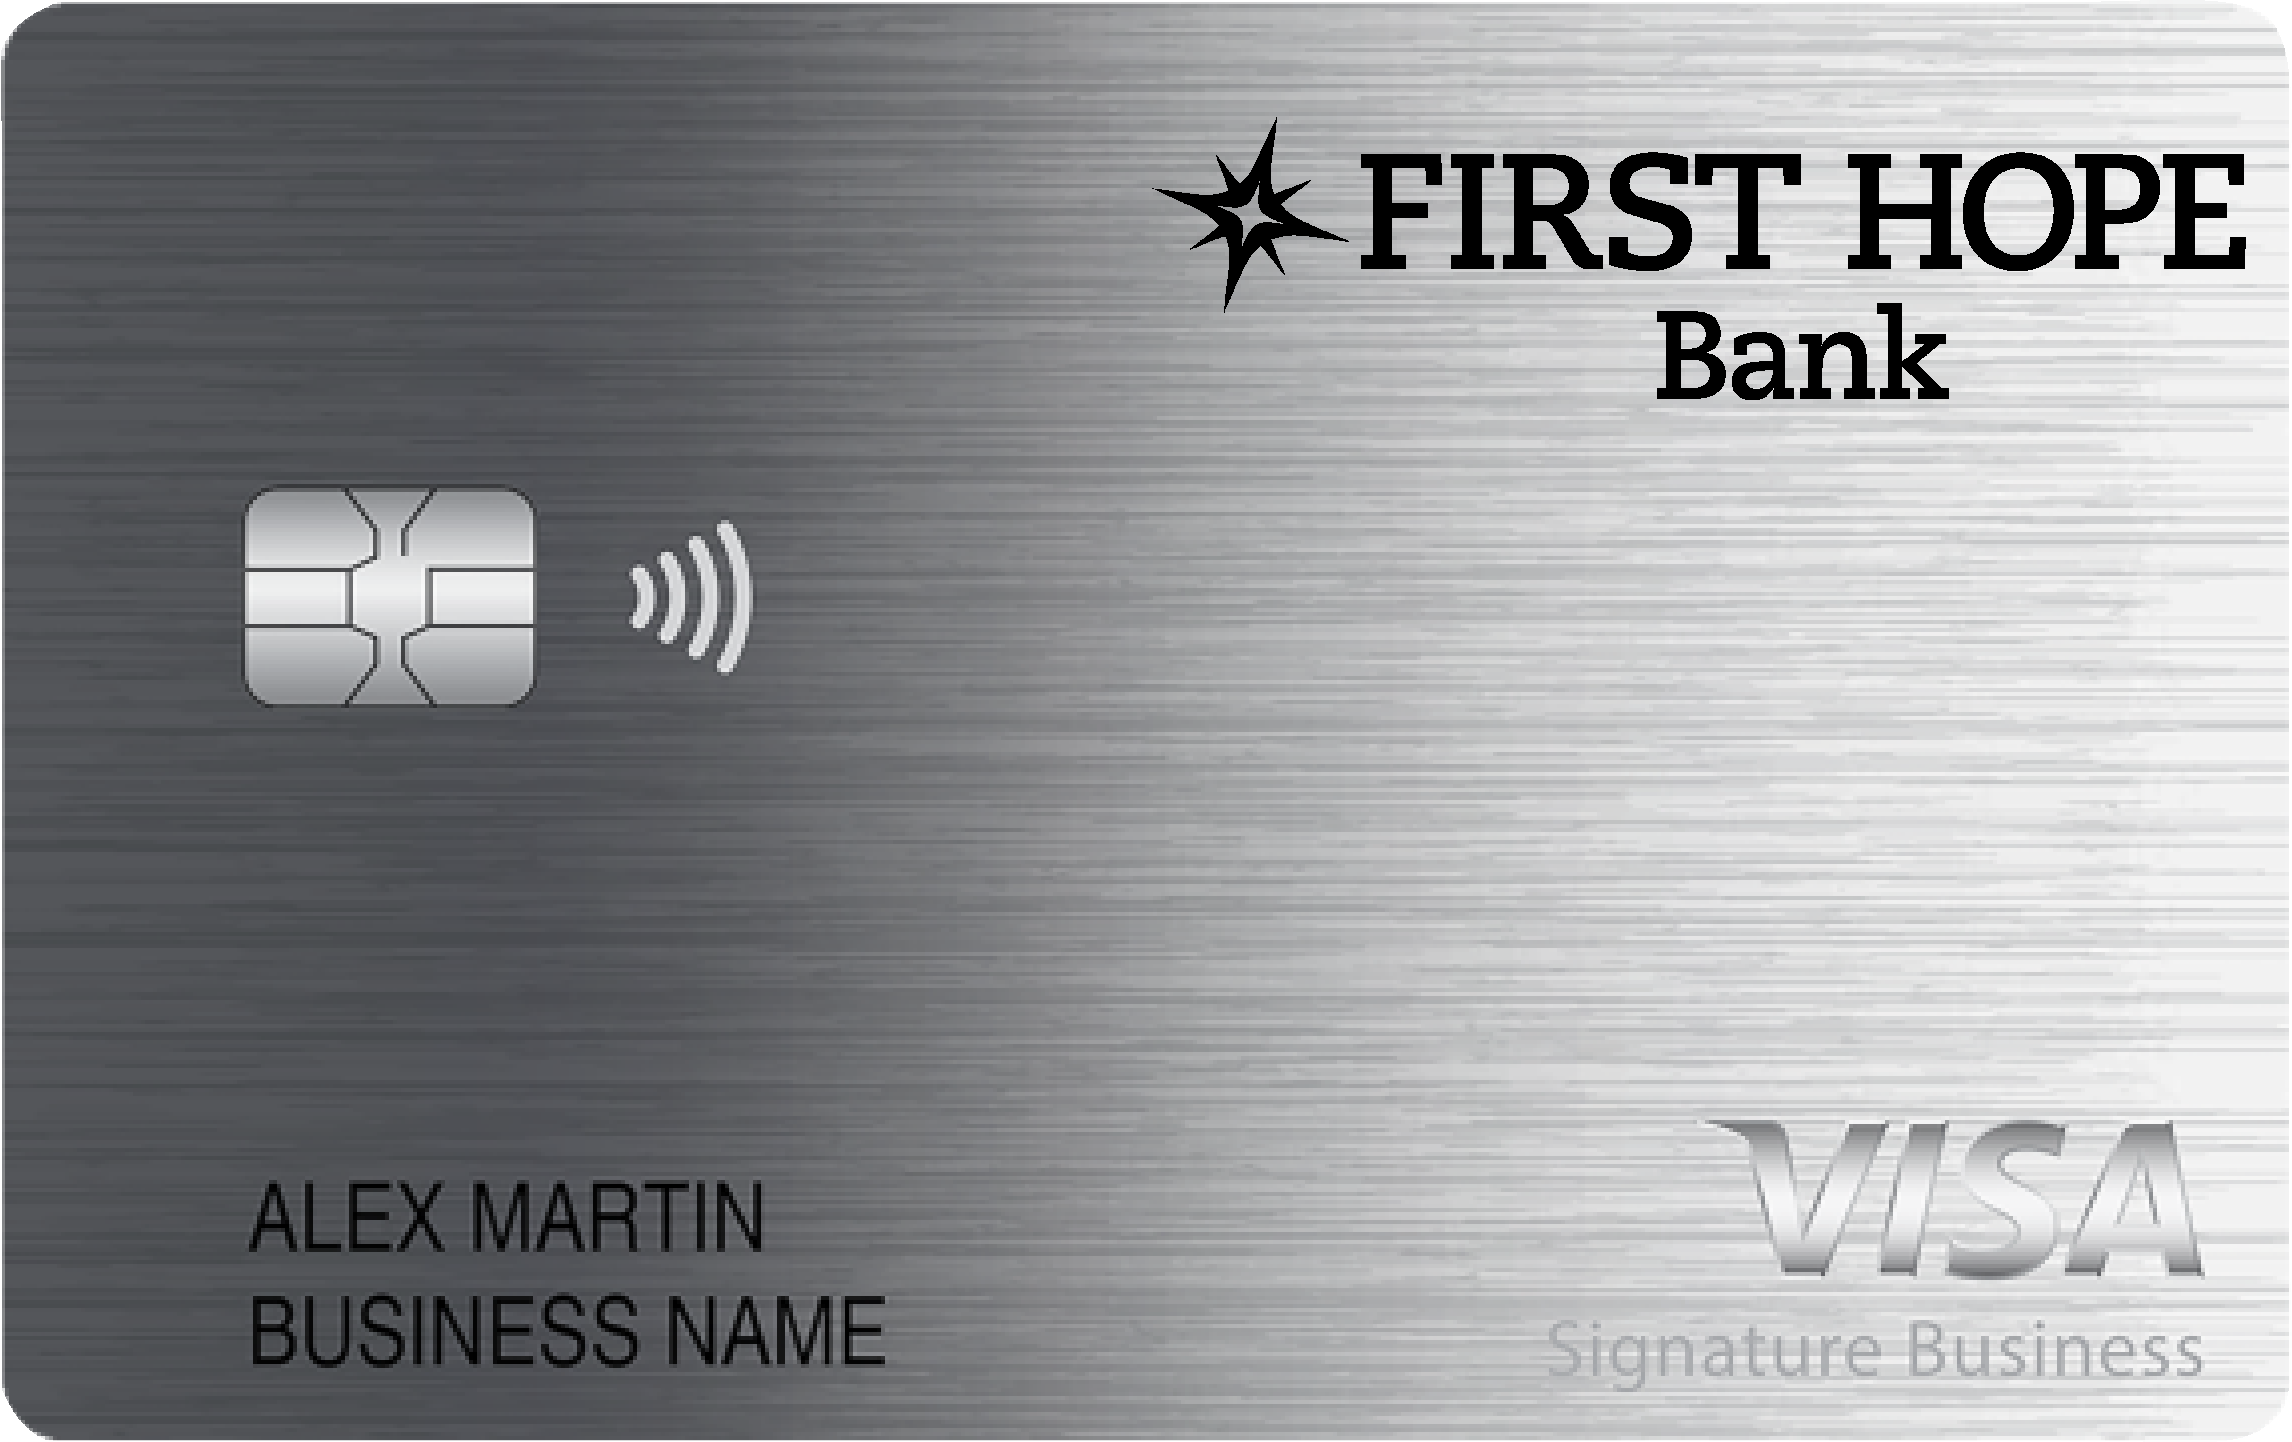 First Hope Bank Smart Business Rewards Card